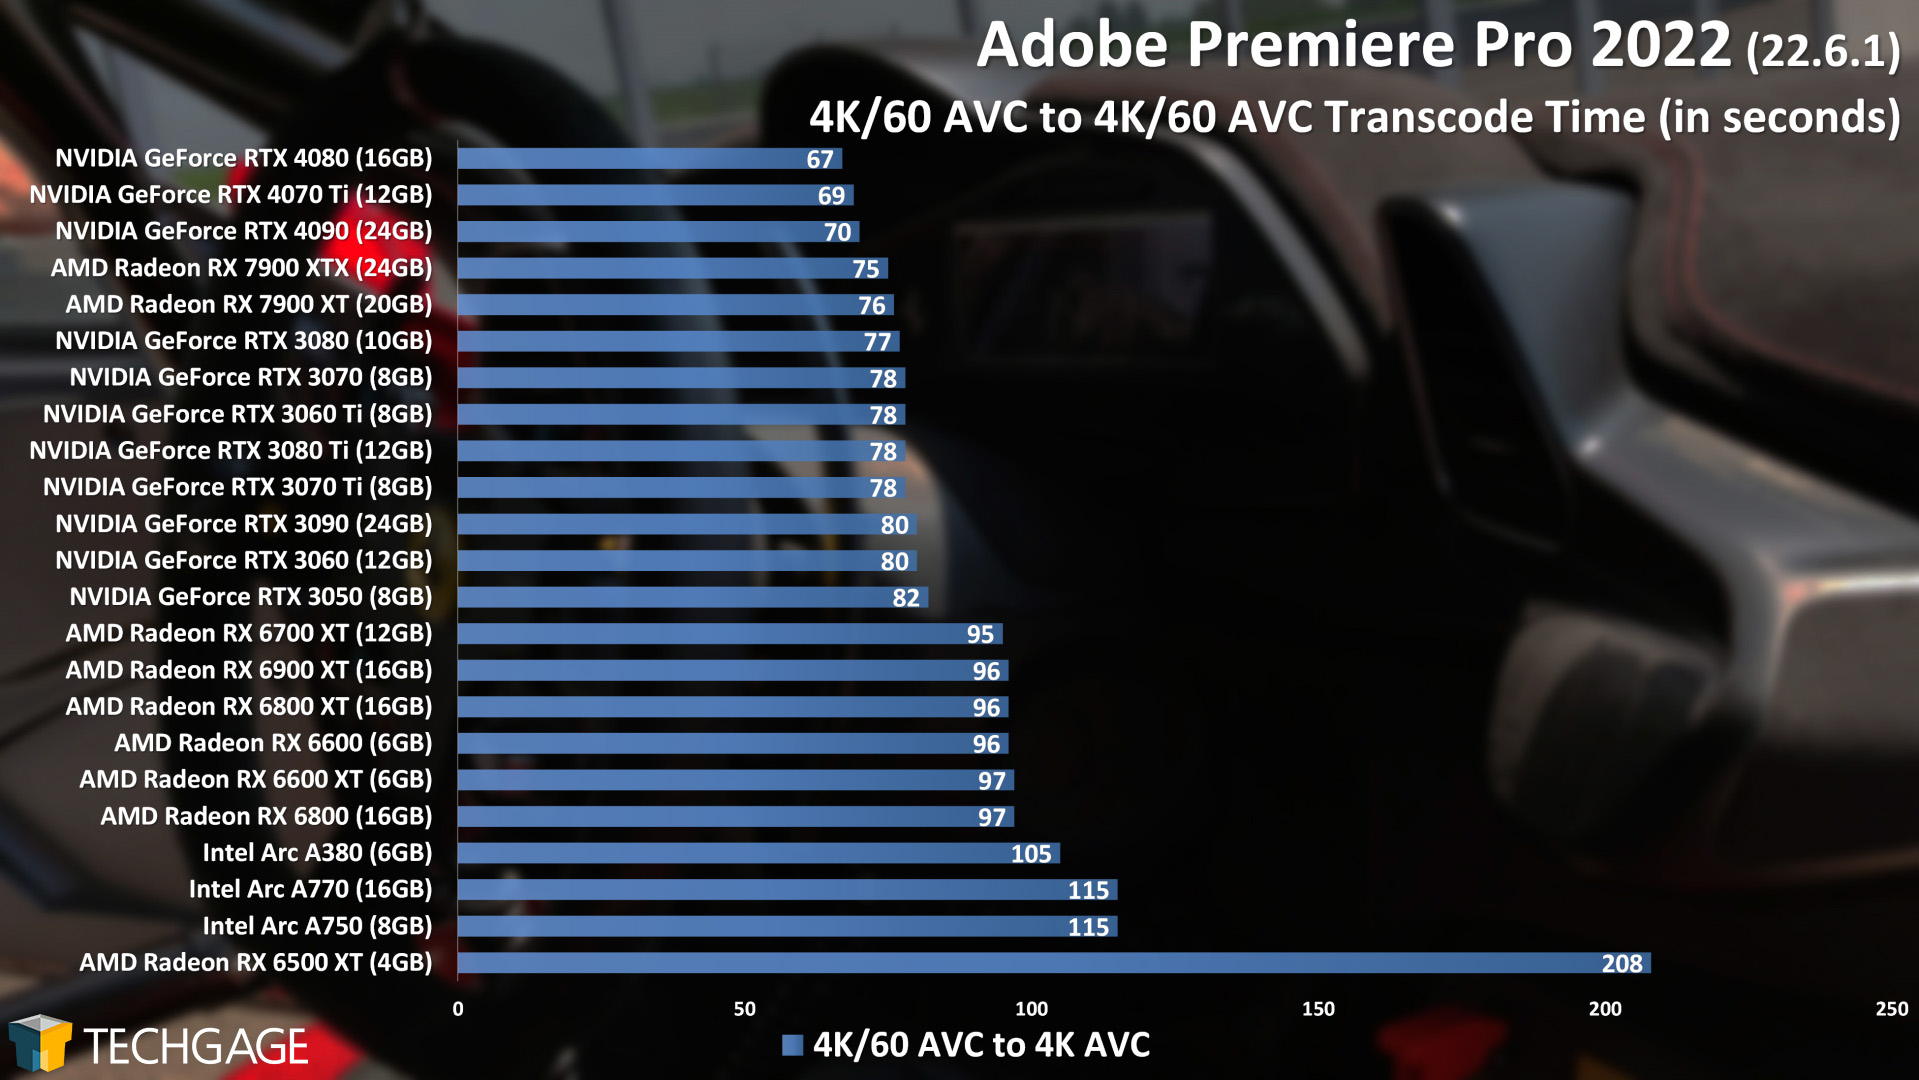 Adobe Premiere Pro - GPU Encoding Performance (4K60 AVC to AVC)